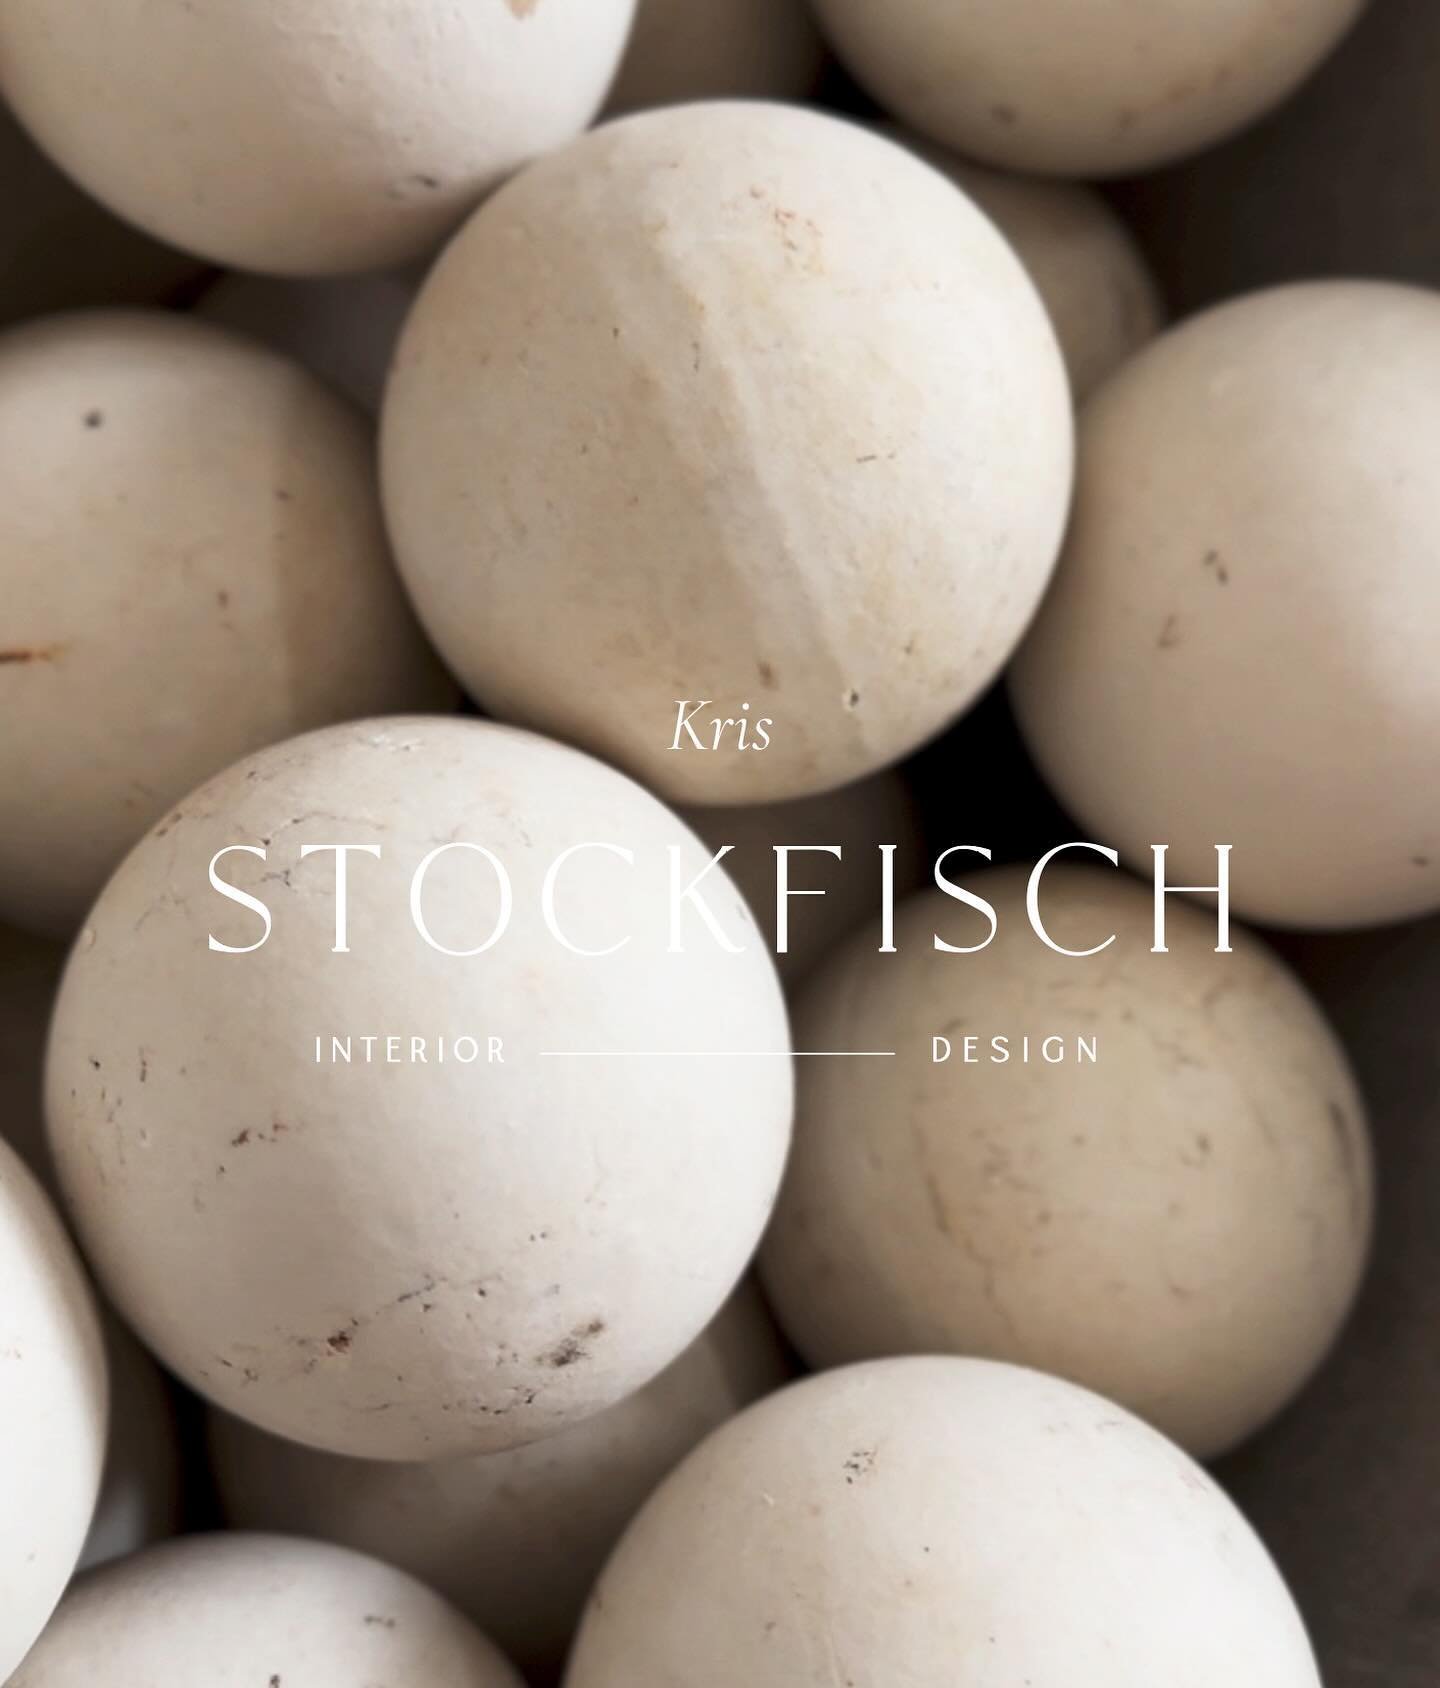 introducing @krisstockfischdesign